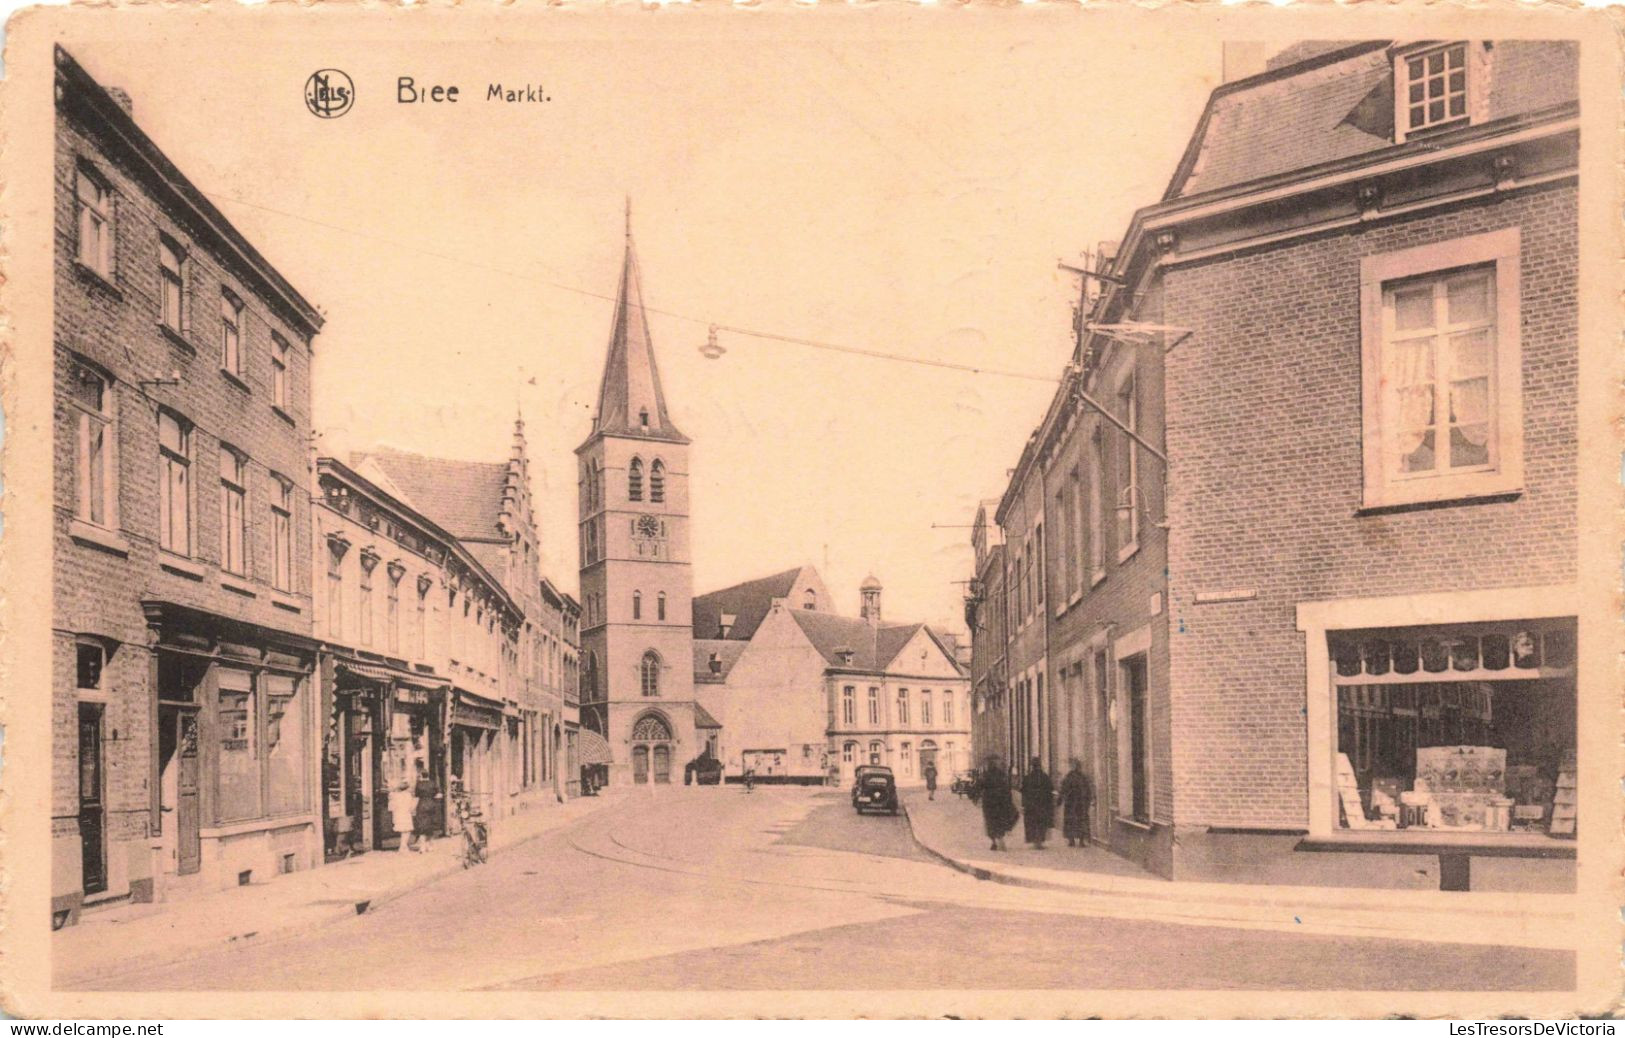 BELGIQUE - Bree - Markt - Carte Postale Ancienne - Bree